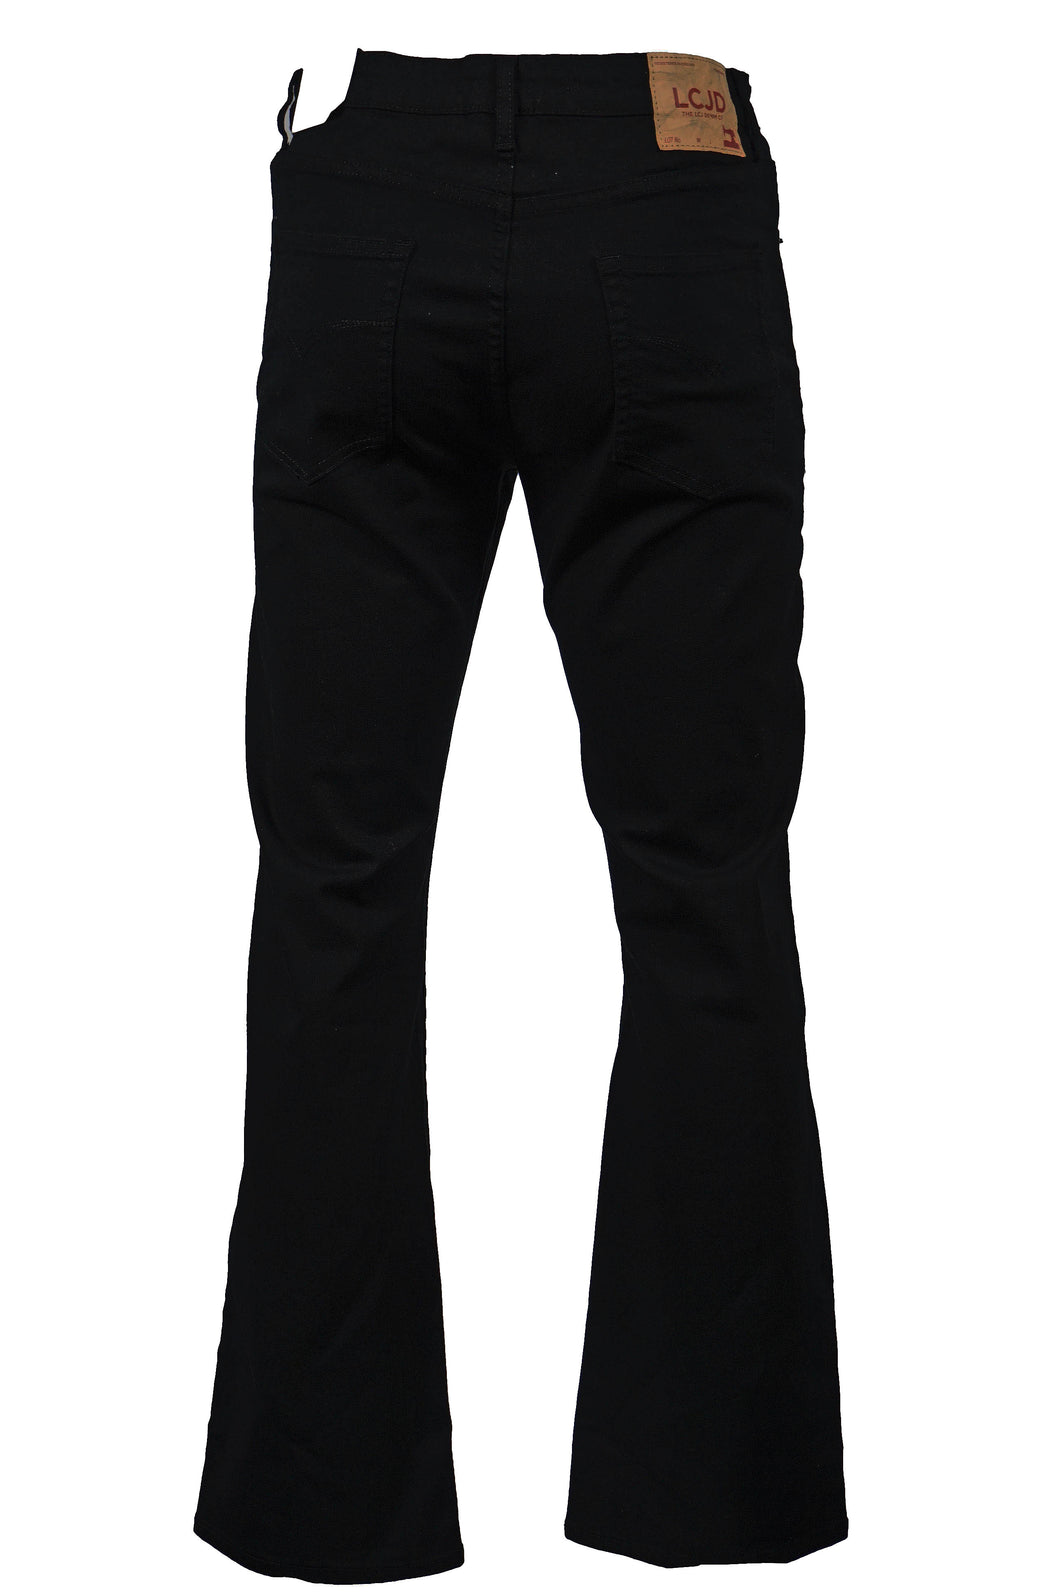 Men's Bootcut Jeans Black Jeans Stretch Indie Retro 70s LC20 | LCJ Den ...